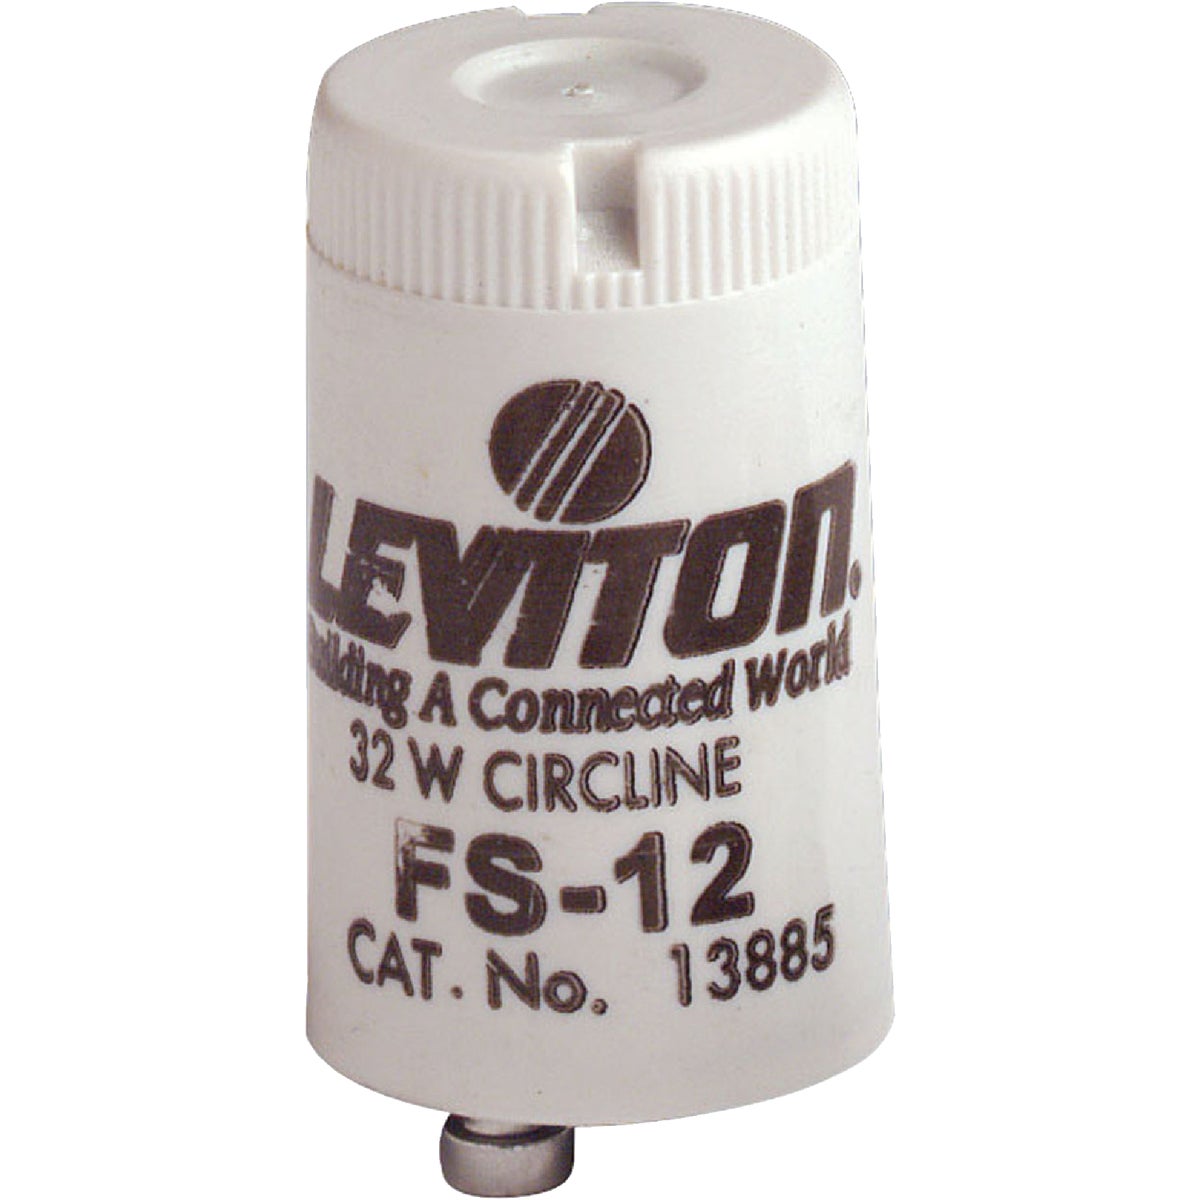 Leviton 32W 2-Pin Circline Fluorescent Starter